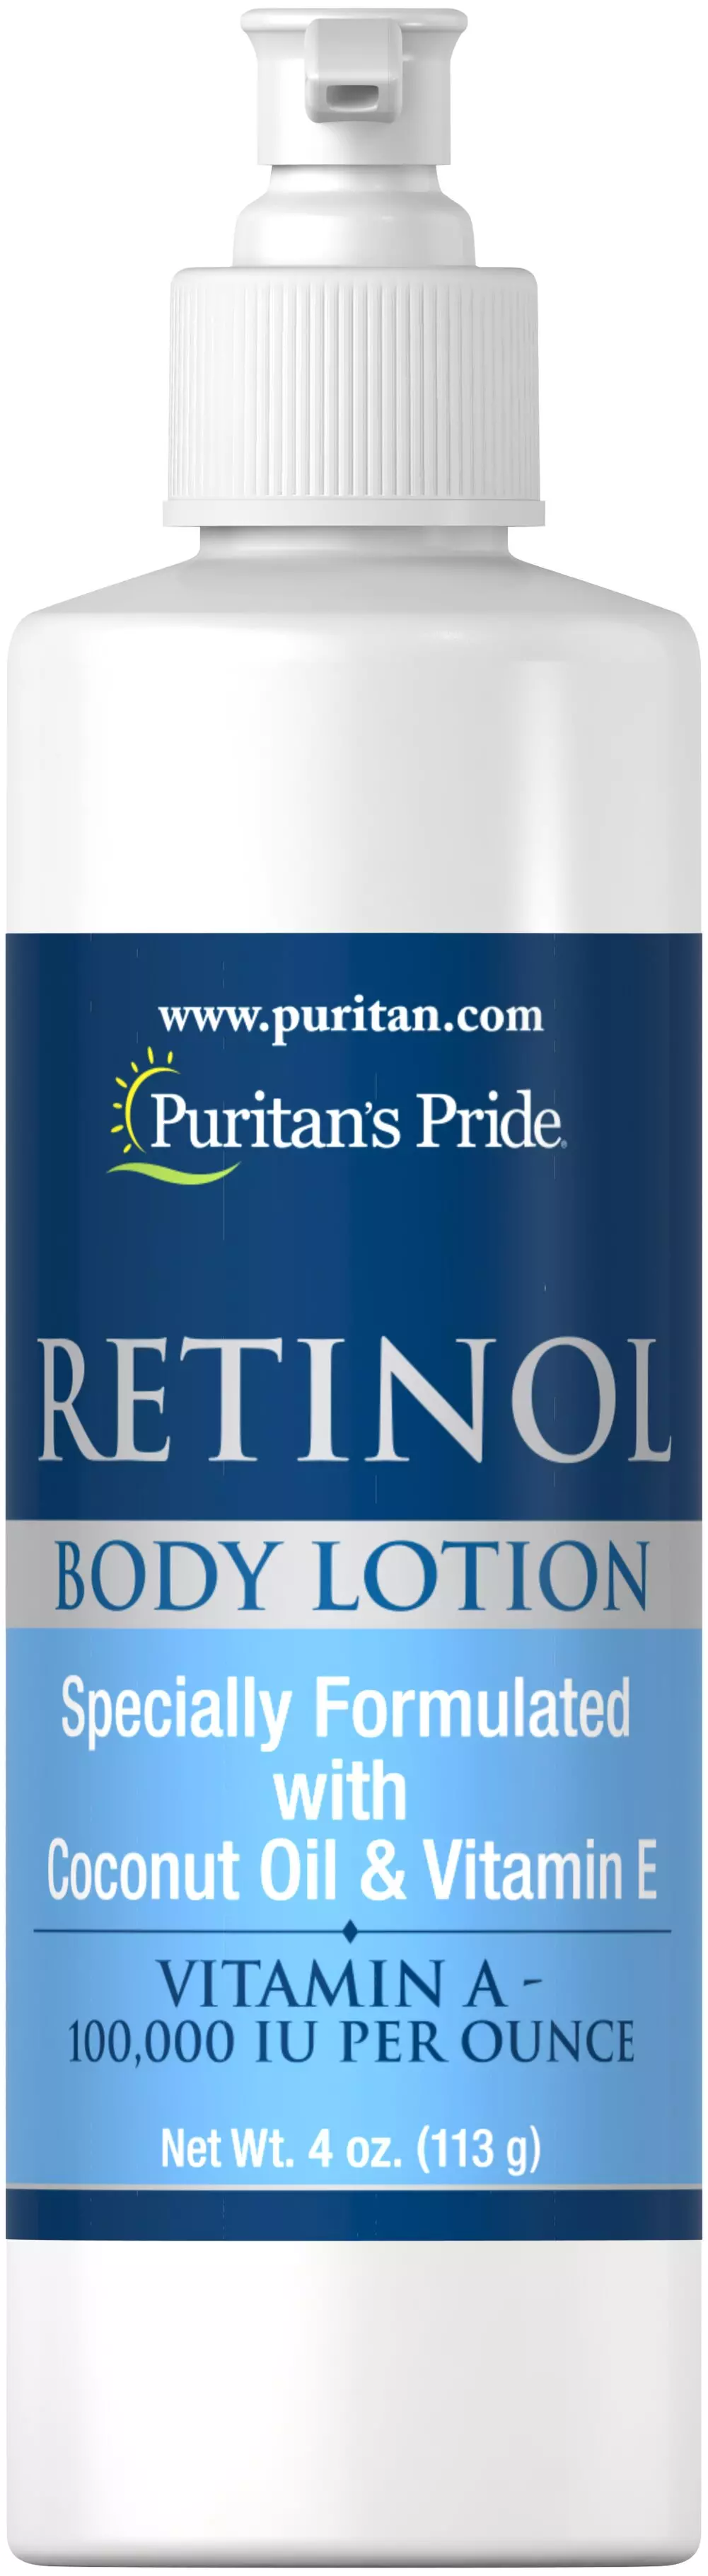 Puritan’s Pride Retinol Body Lotion